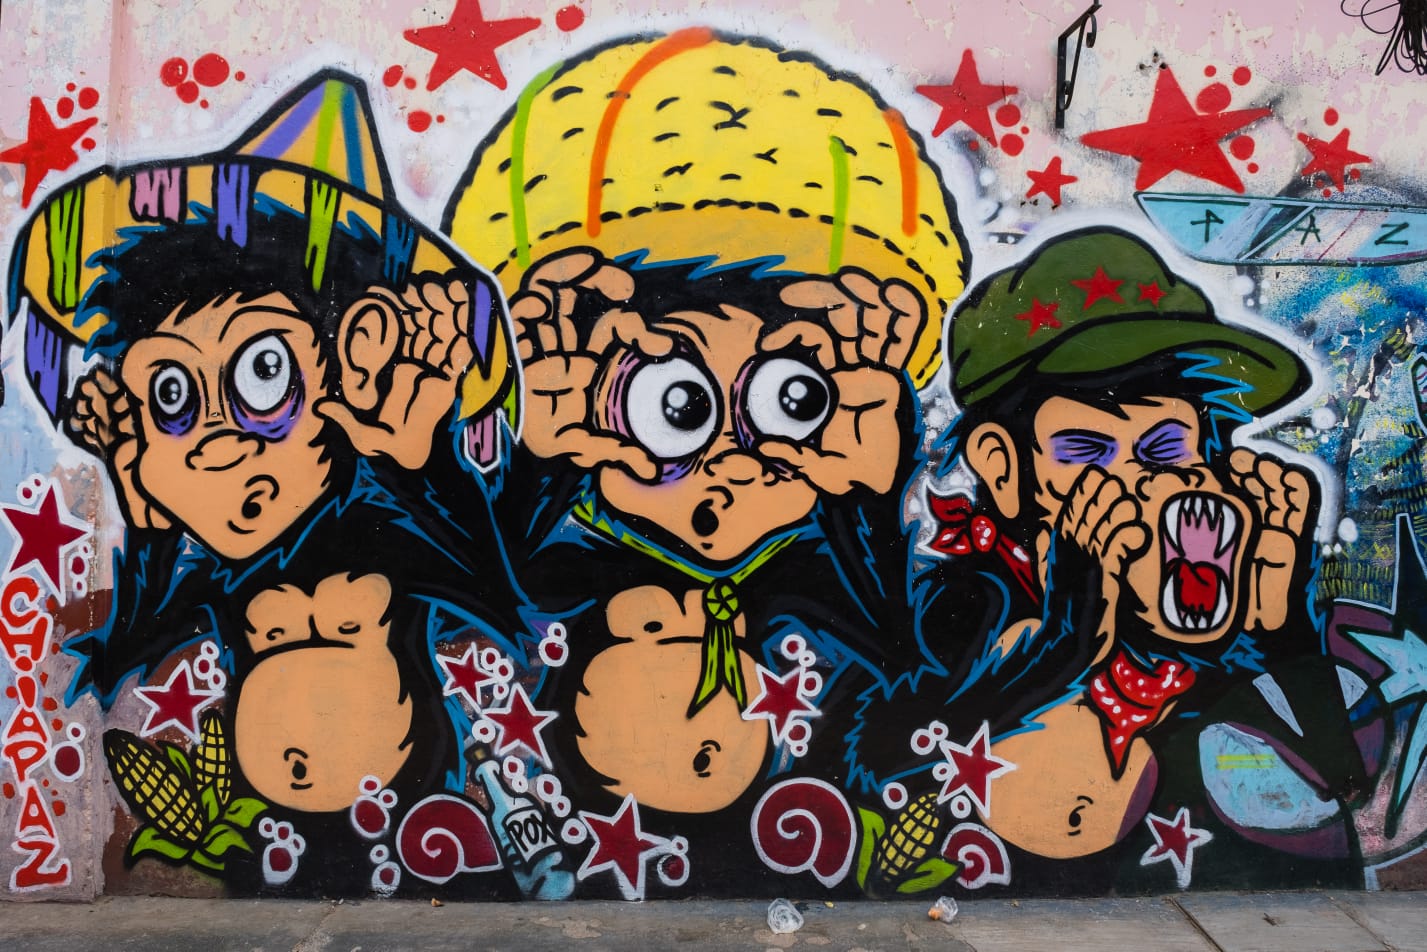 Tour graffiti and culture San Cris